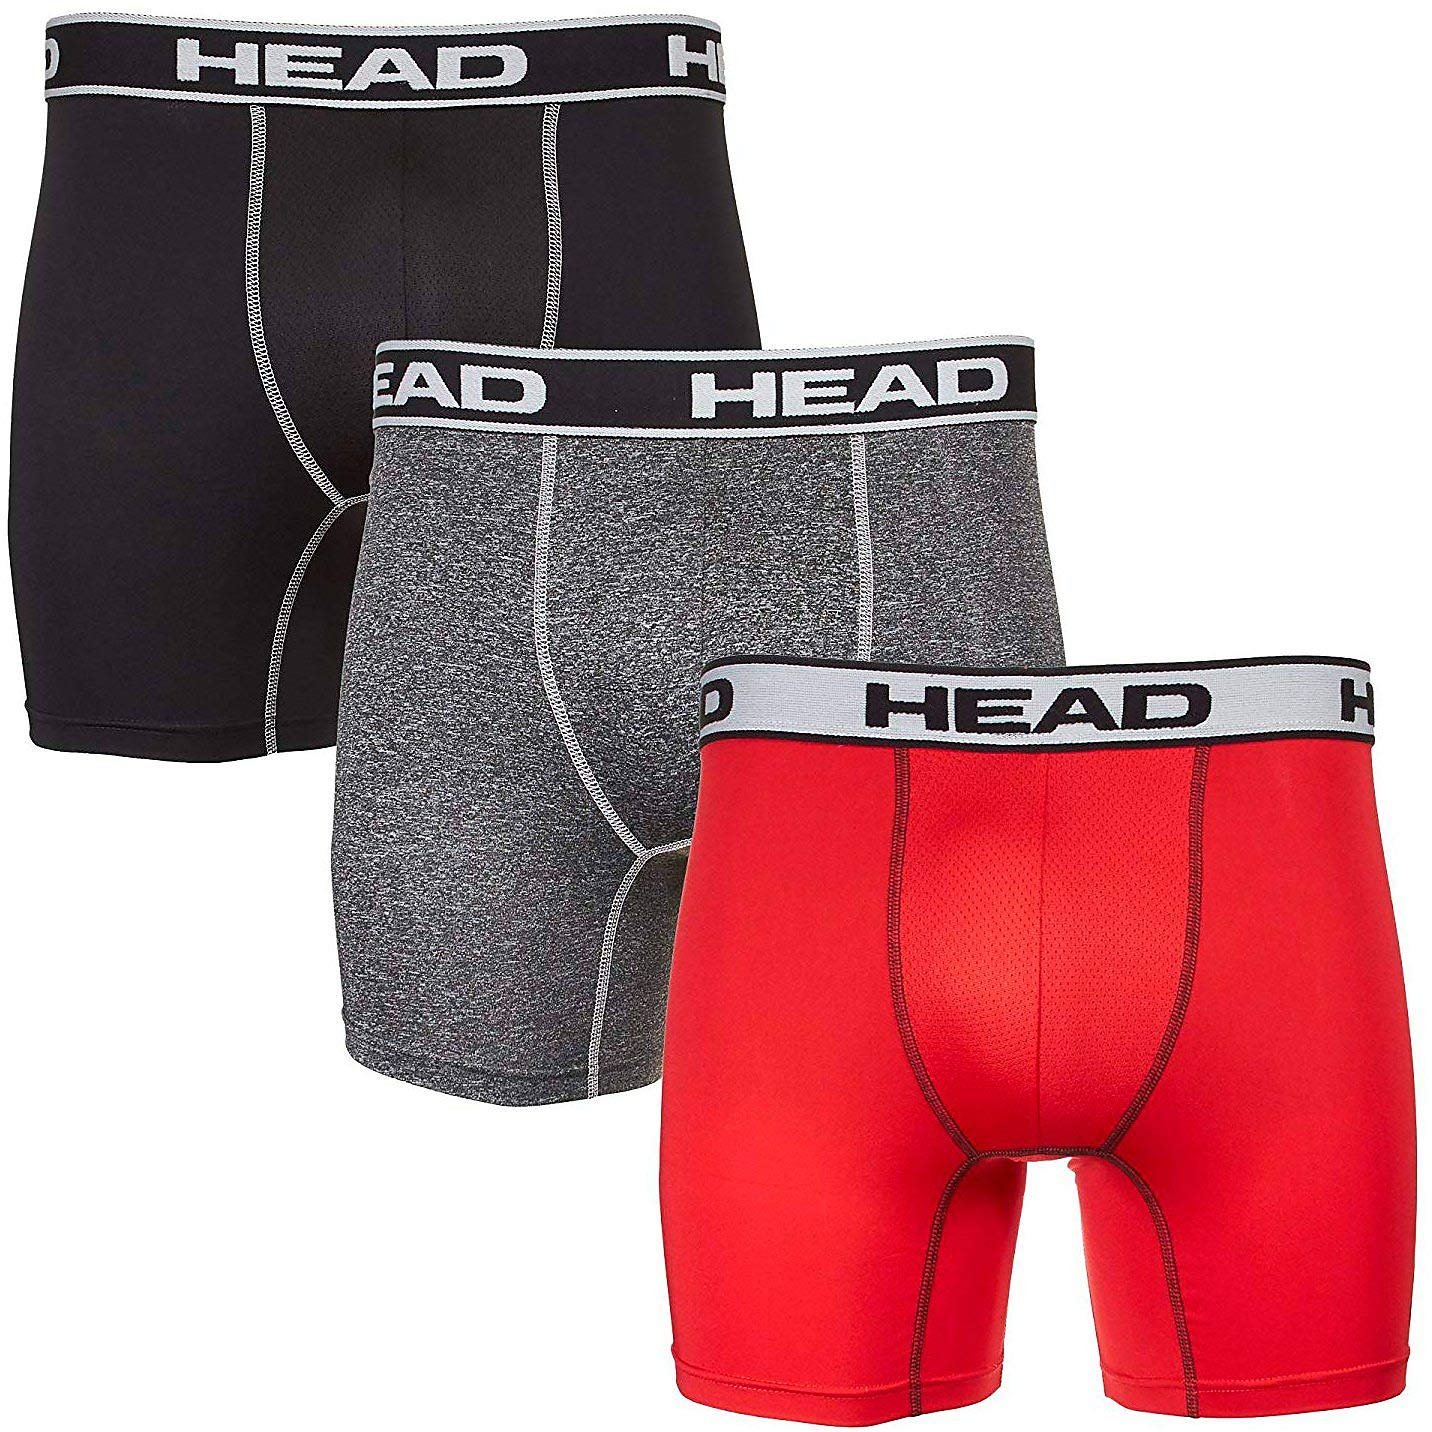 HEAD Mens Performance Underwear 3-PACK Boxer Briefs S-5XL Polyester ...